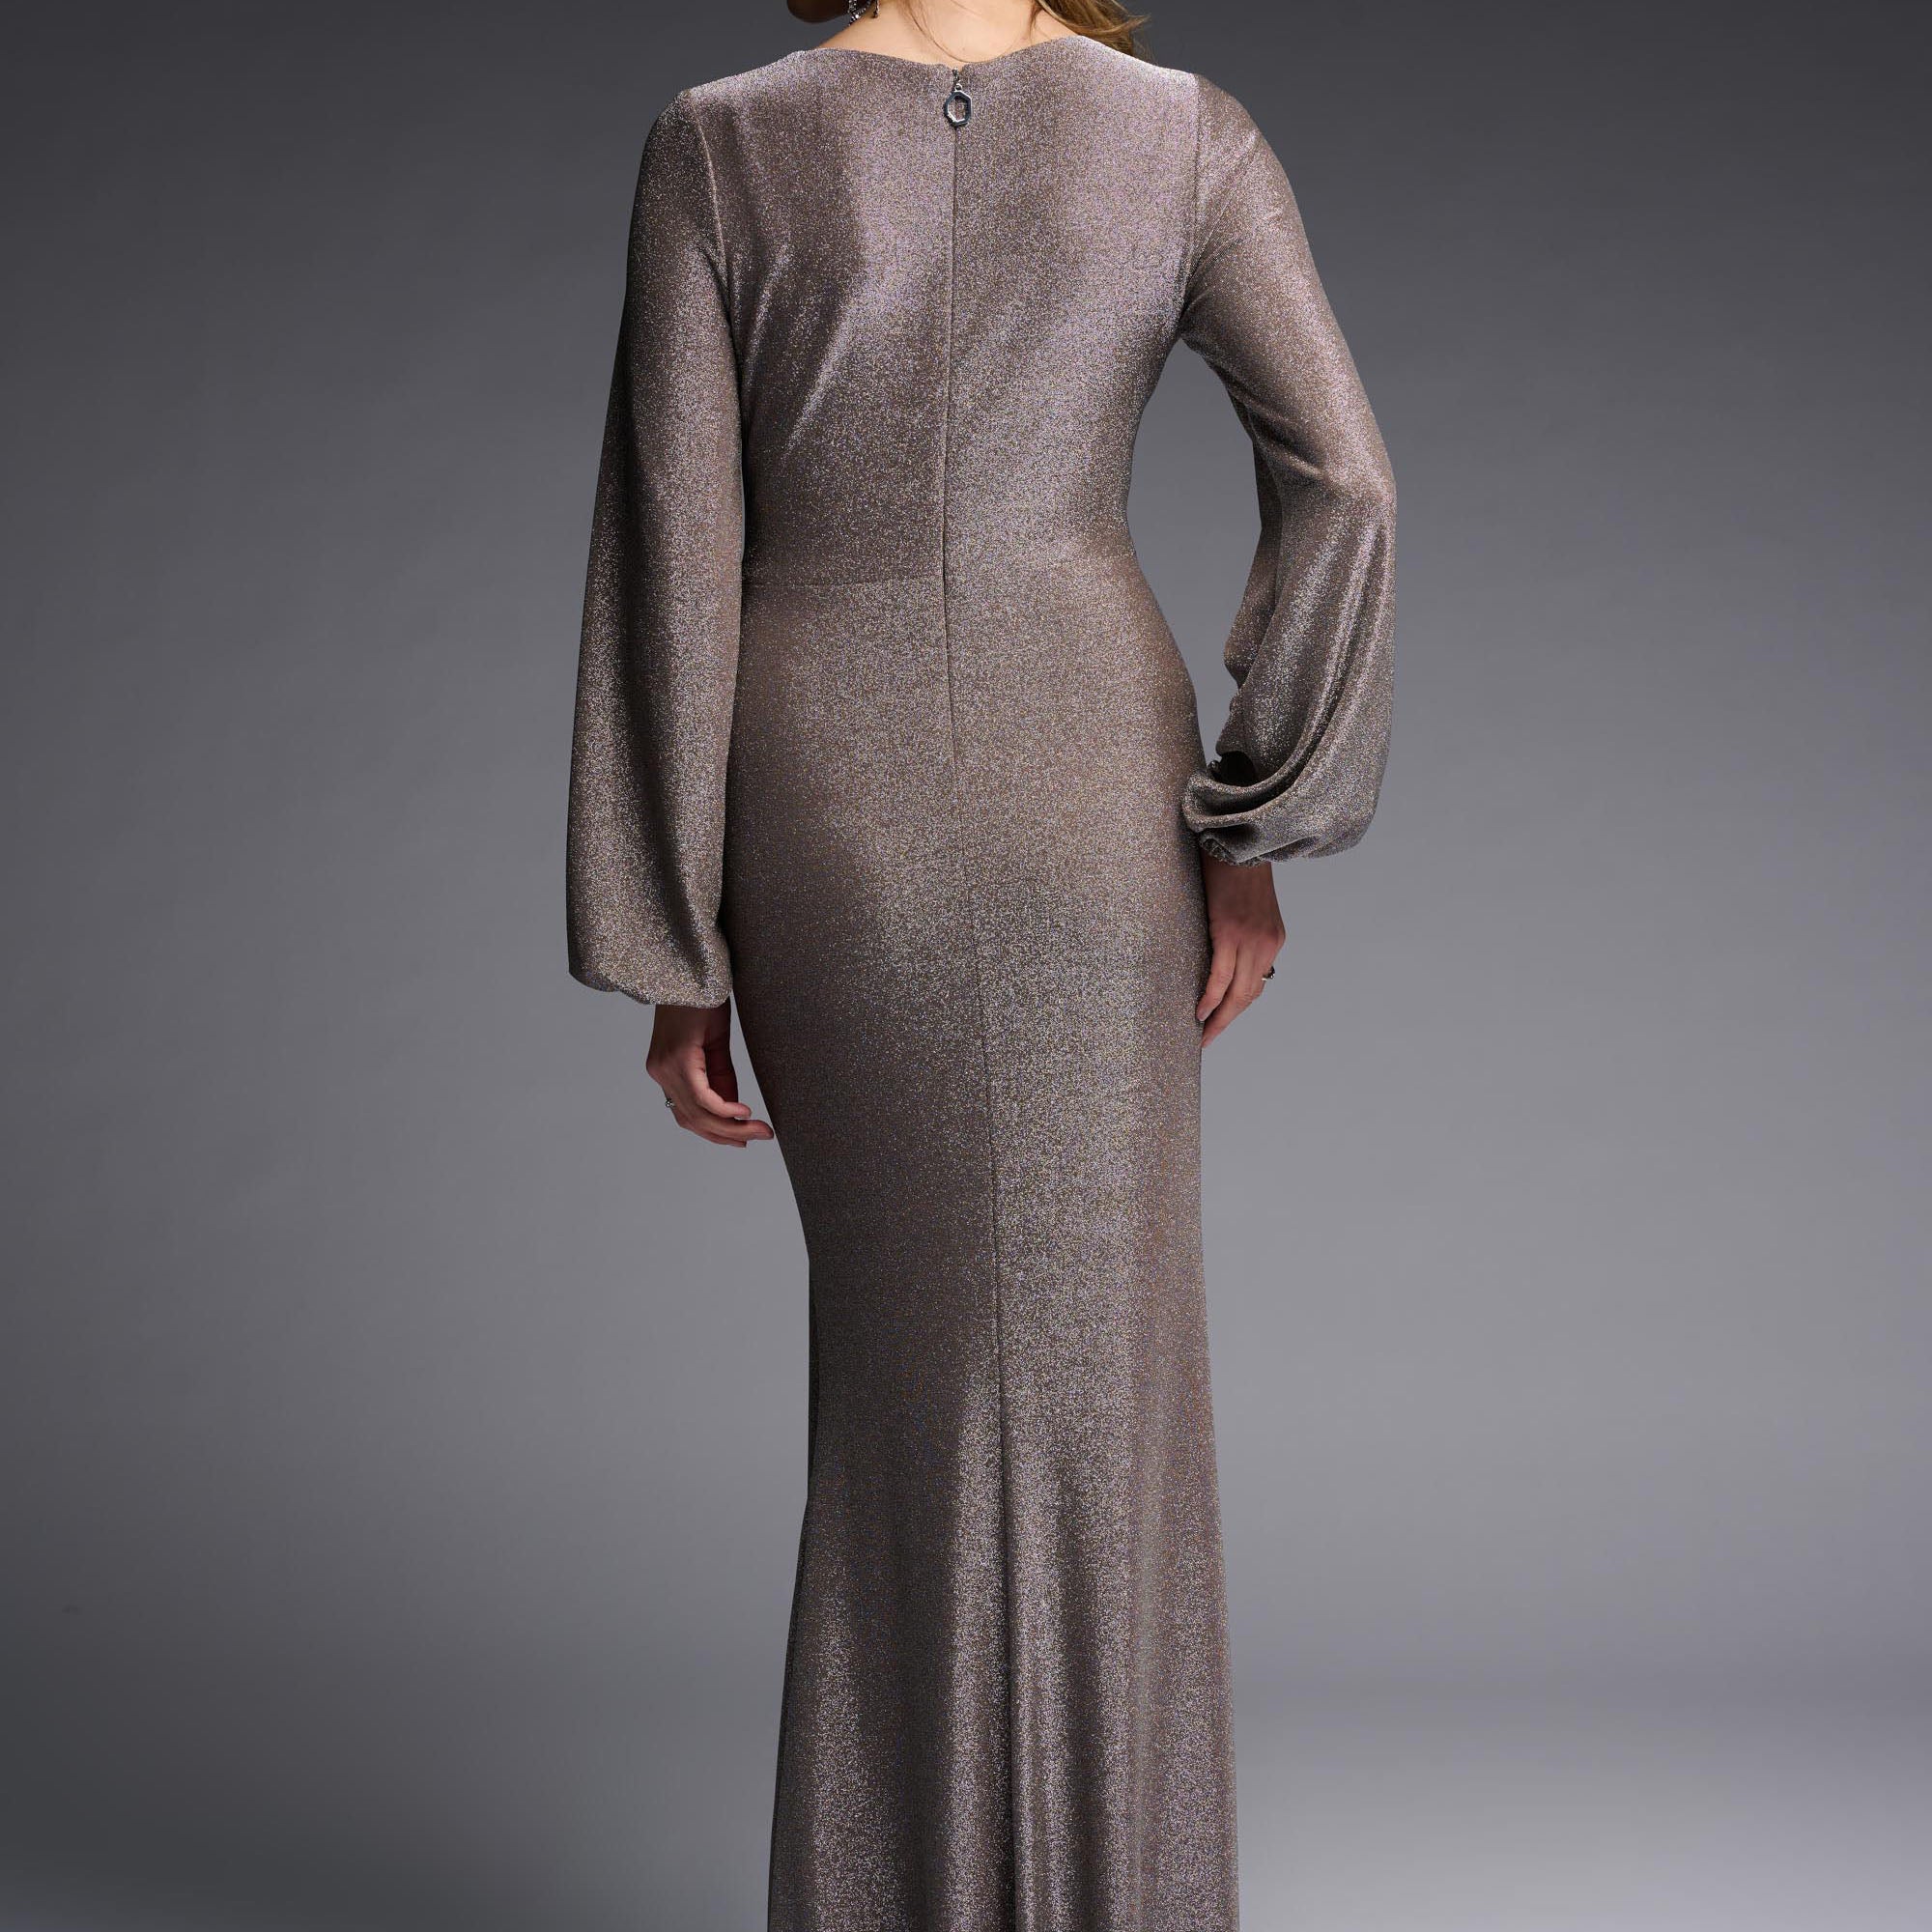 Dress JRK (224162) - Rinaldi's Fashions Maryborough